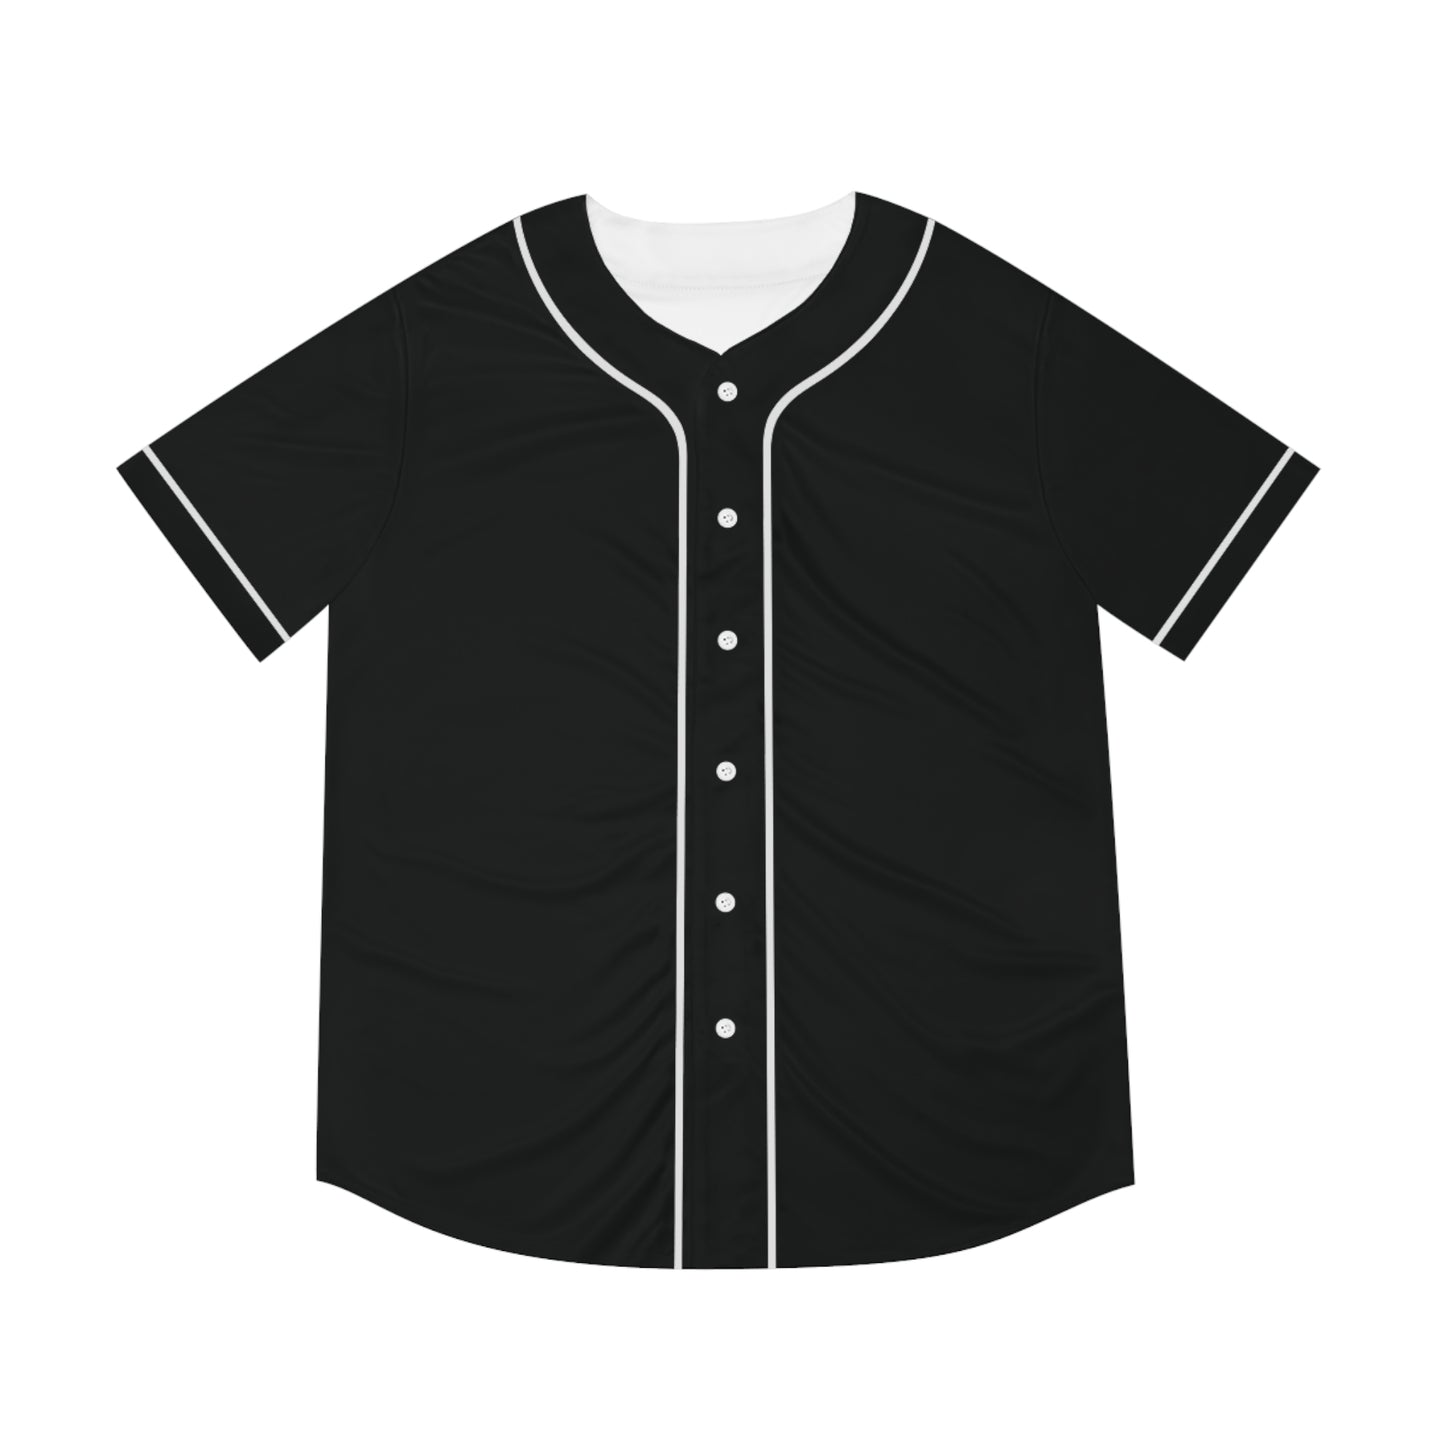 Black Baseball Jersey